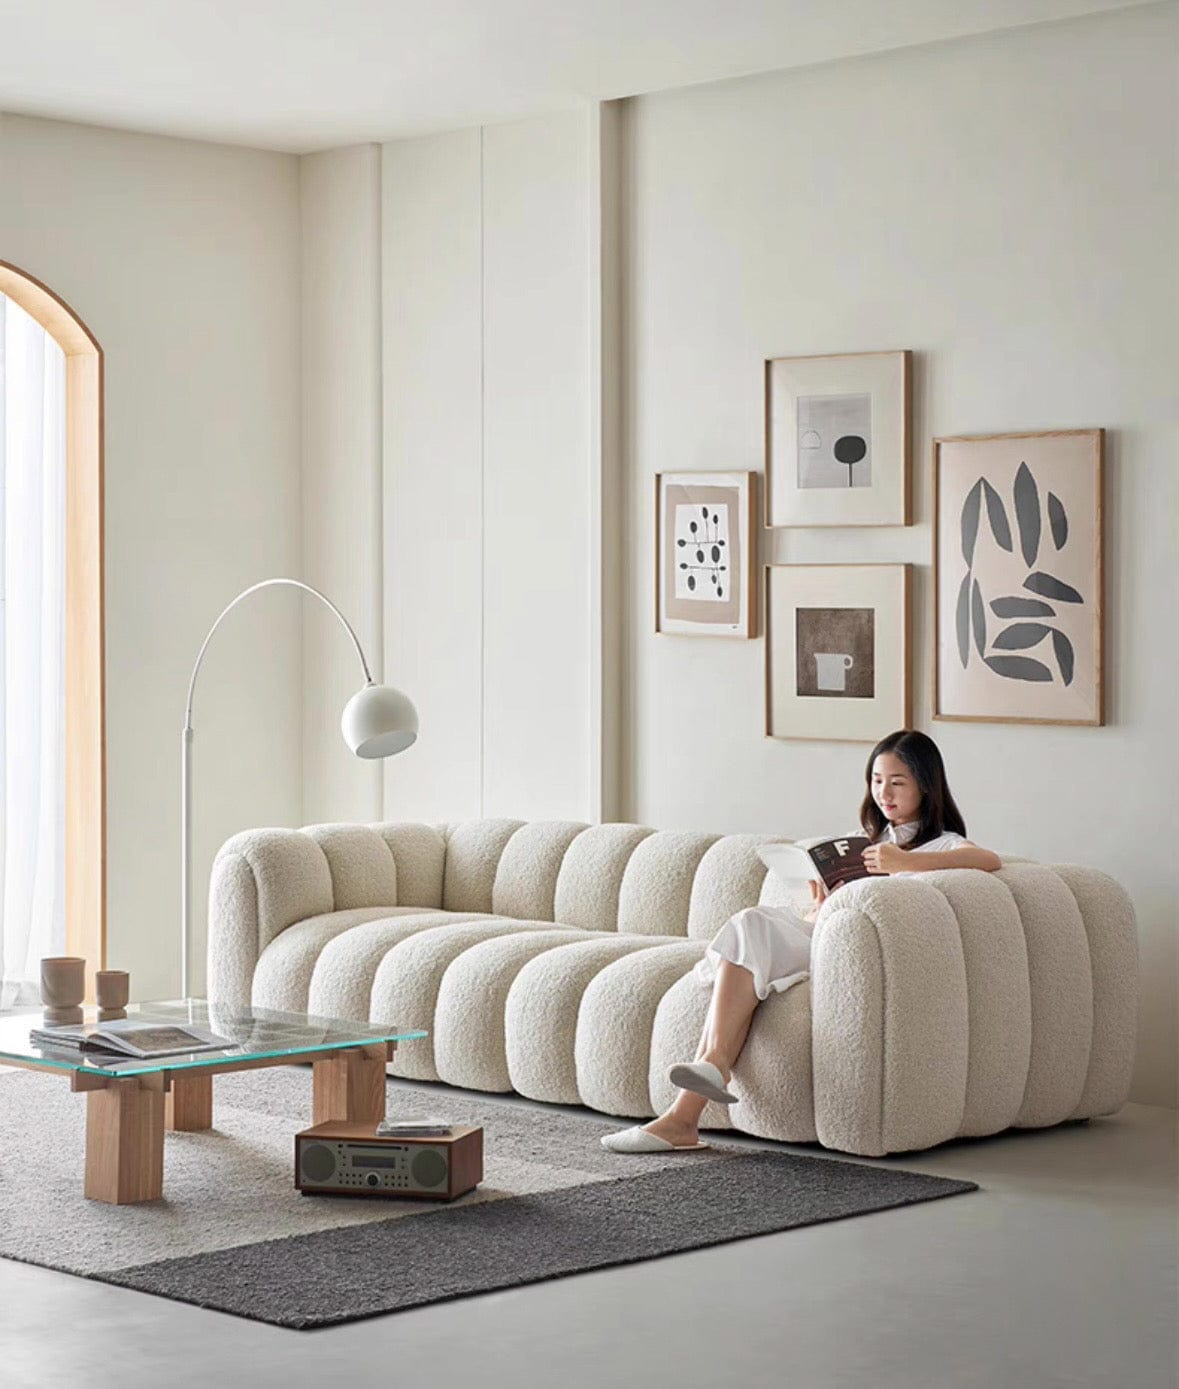 Home Atelier Zuric Scratch Resistant Sofa